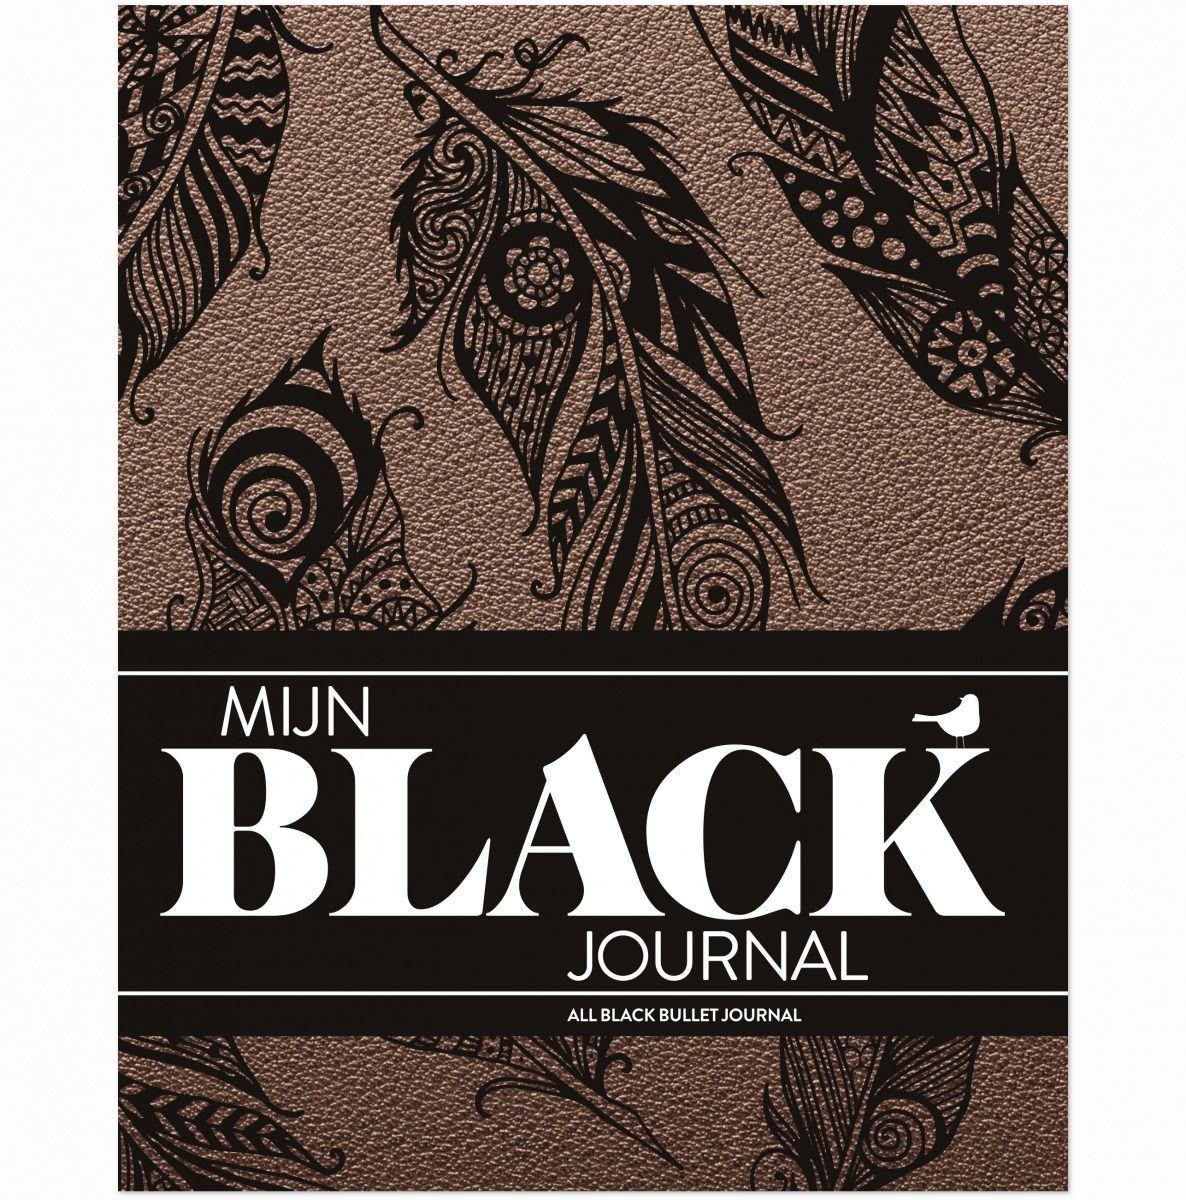 Nederigheid Armoedig Aas Mijn black journal - Bohemian brown Kopen? - Invulboekjes.nl